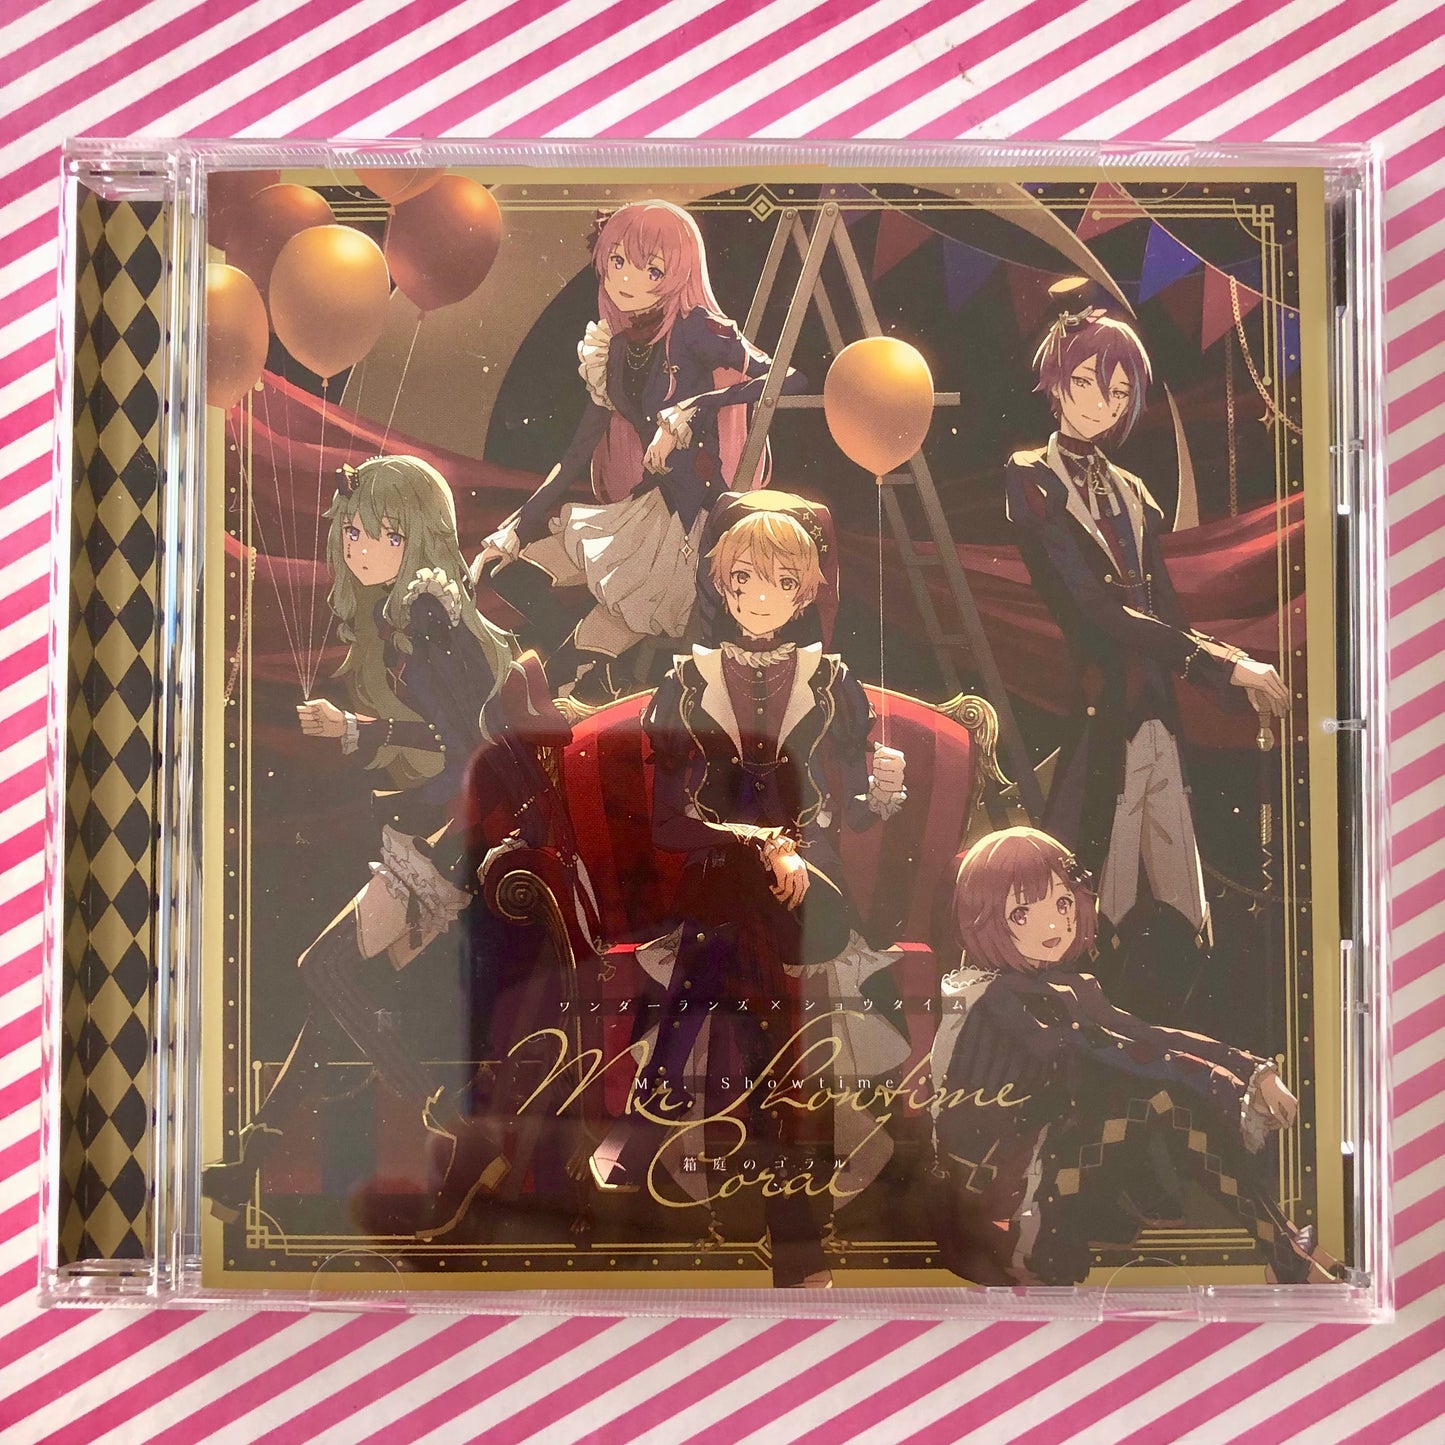 Wonderlands x Showtime - Mr. Showtime / Hakoniwa No Coral Single CD Project Sekai Colorful Stage! ft. Hatsune Miku